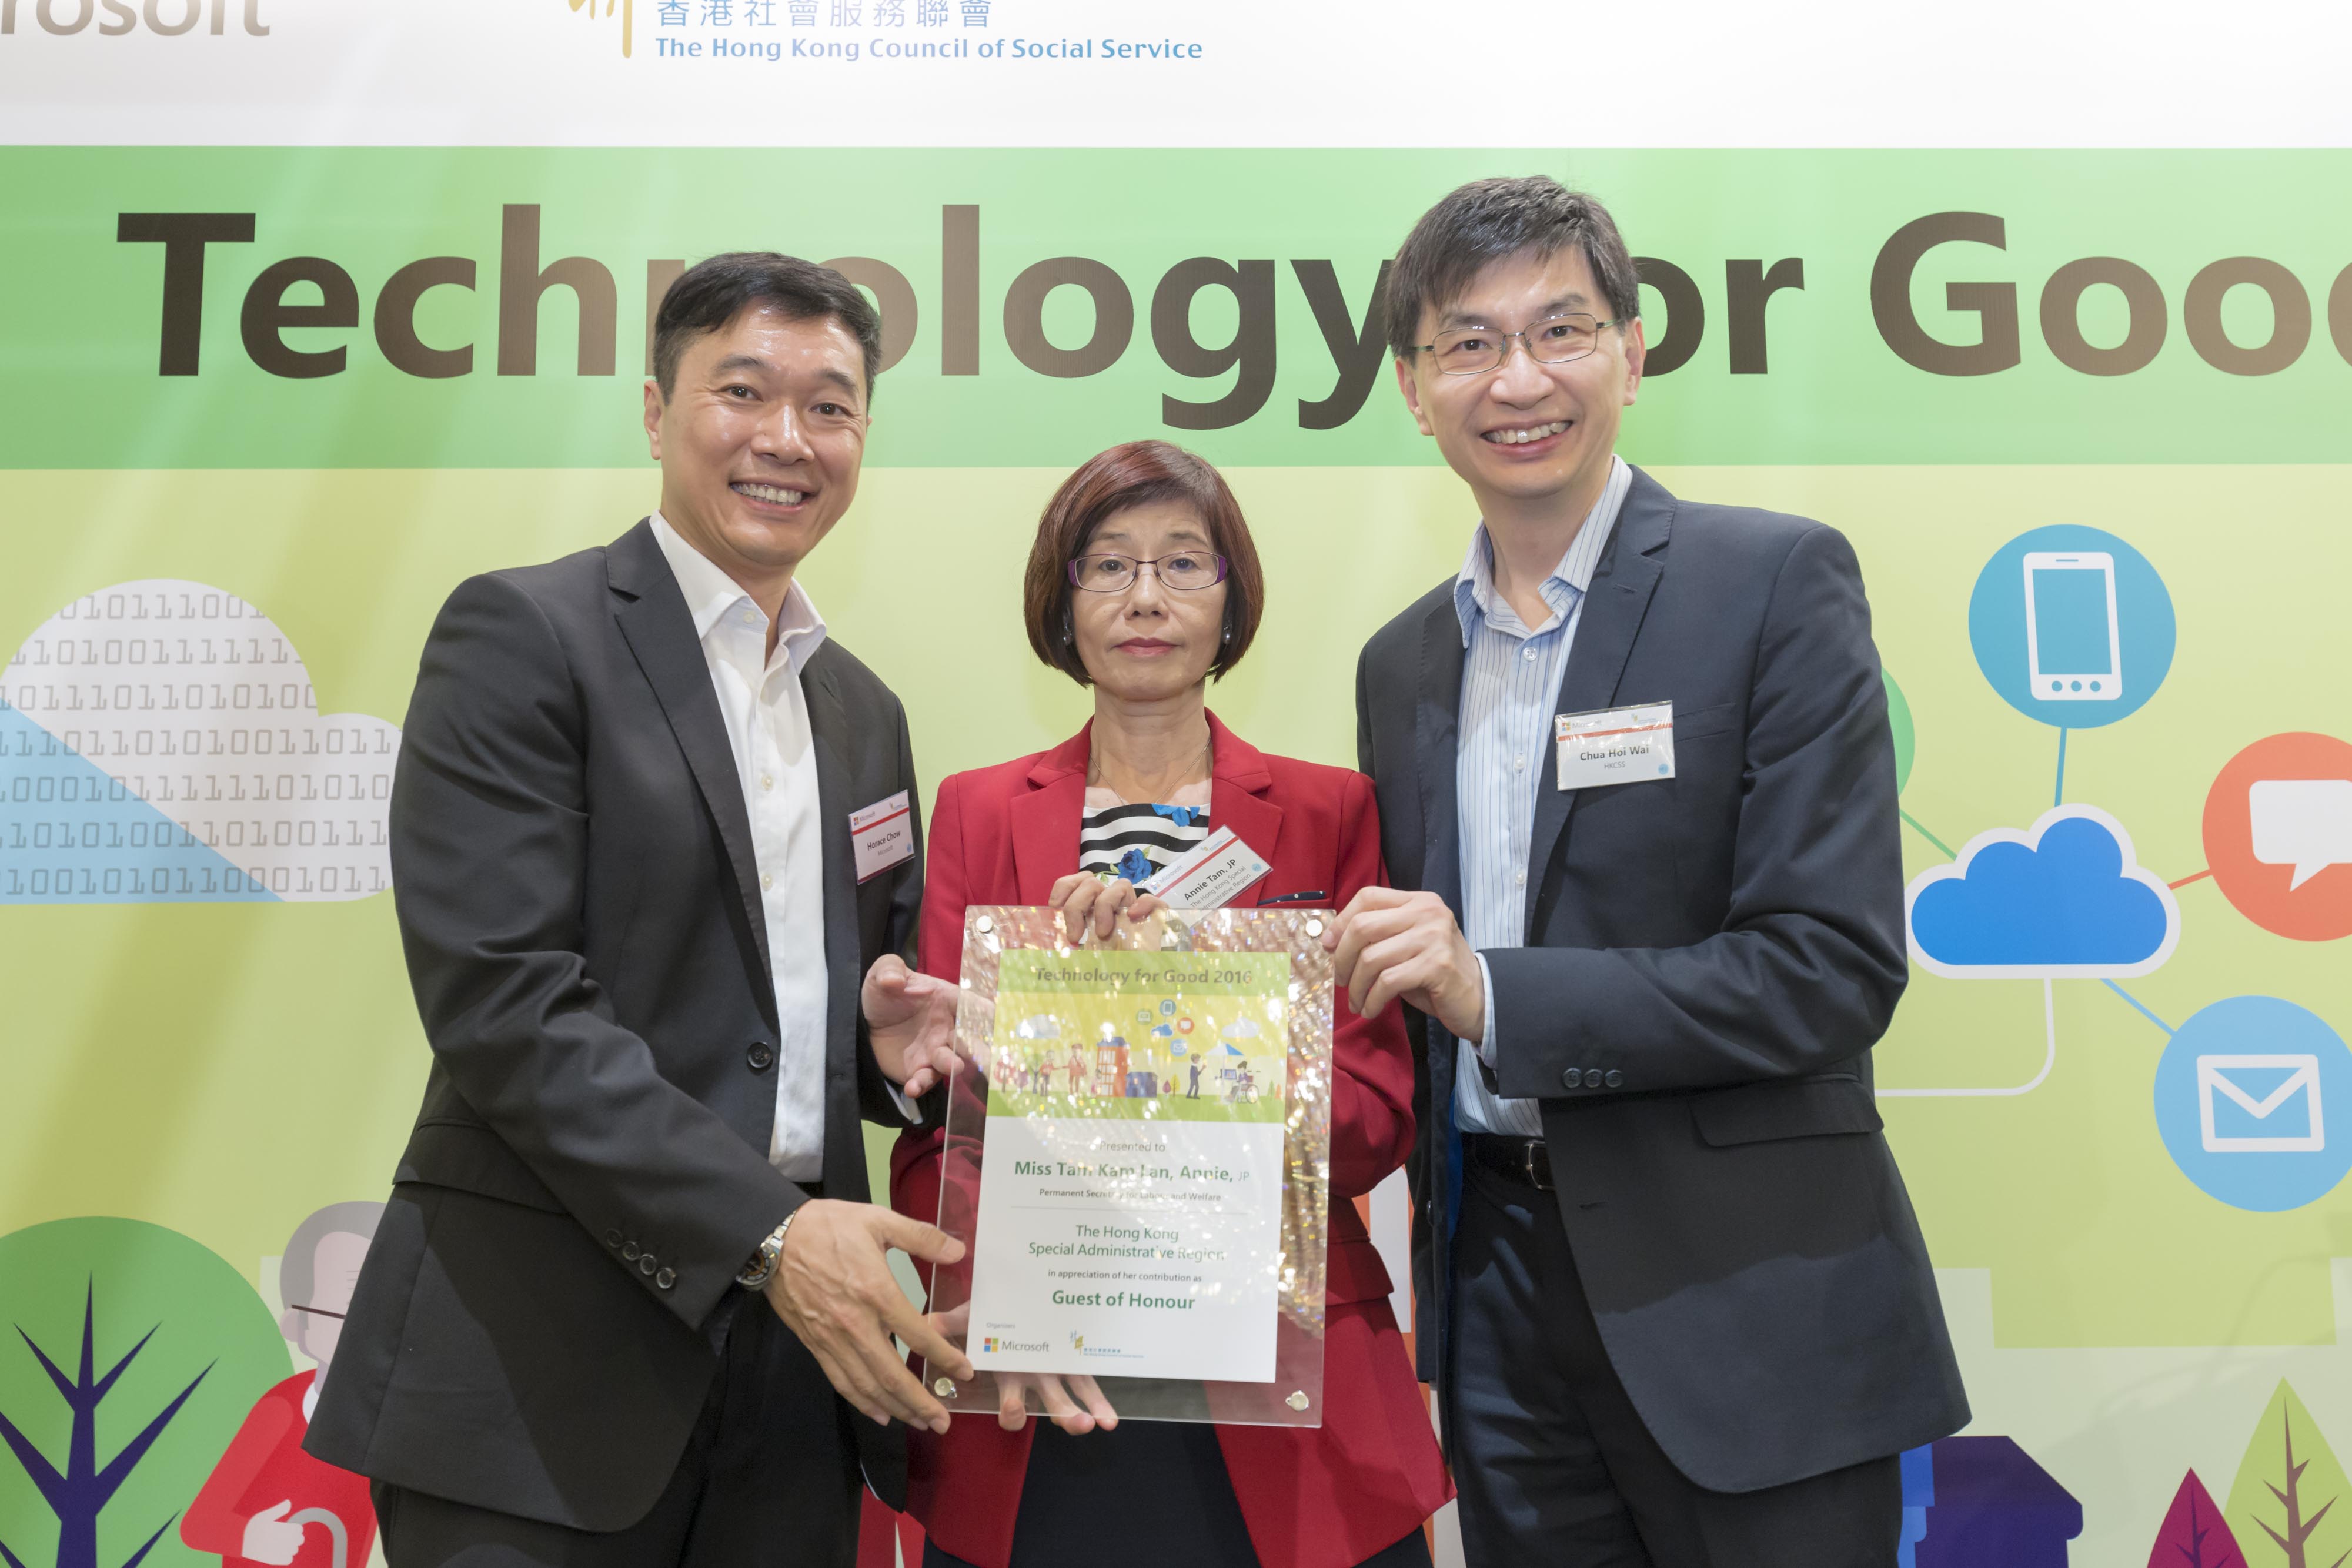 Hong Kong: Technology for Good 2016 Events